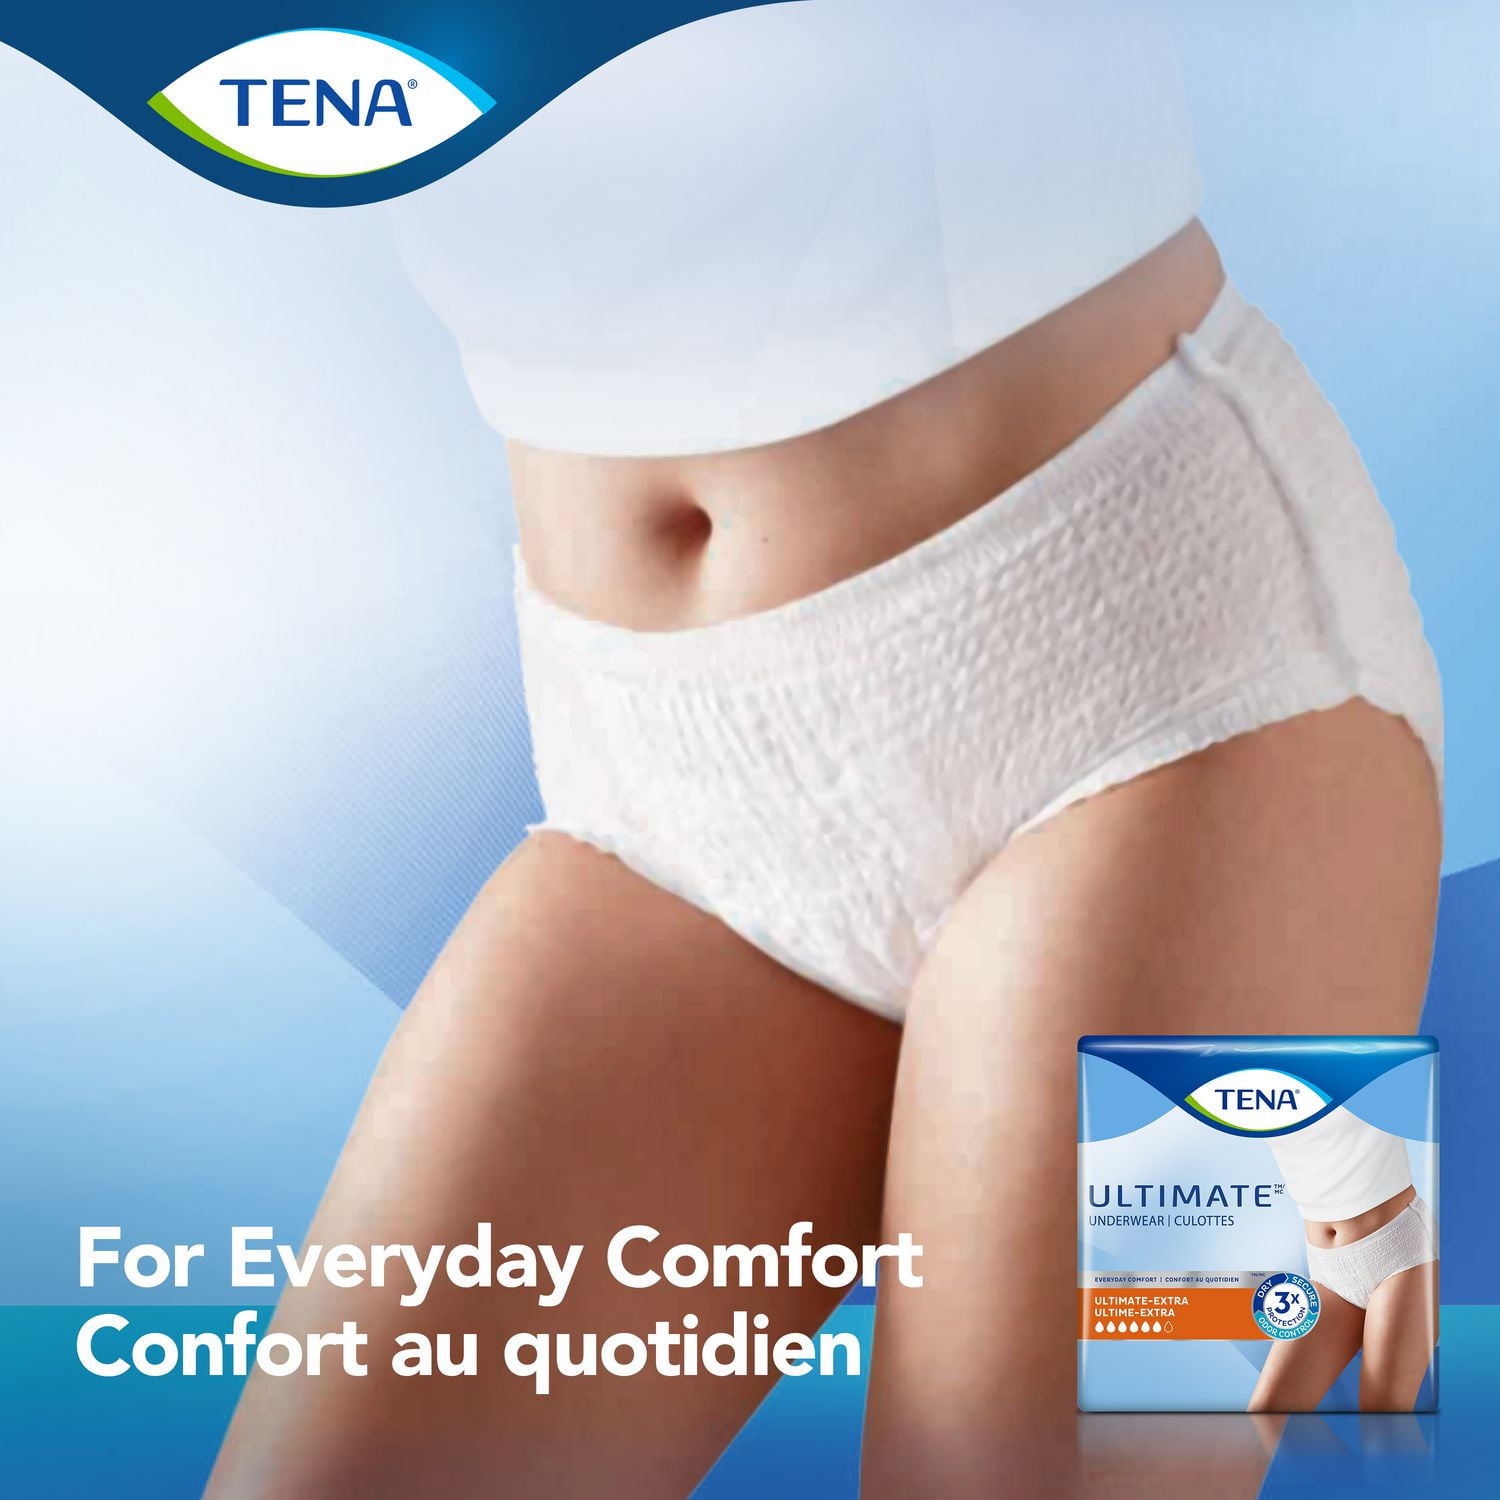 FREE Tena Underwear Sample Kit!